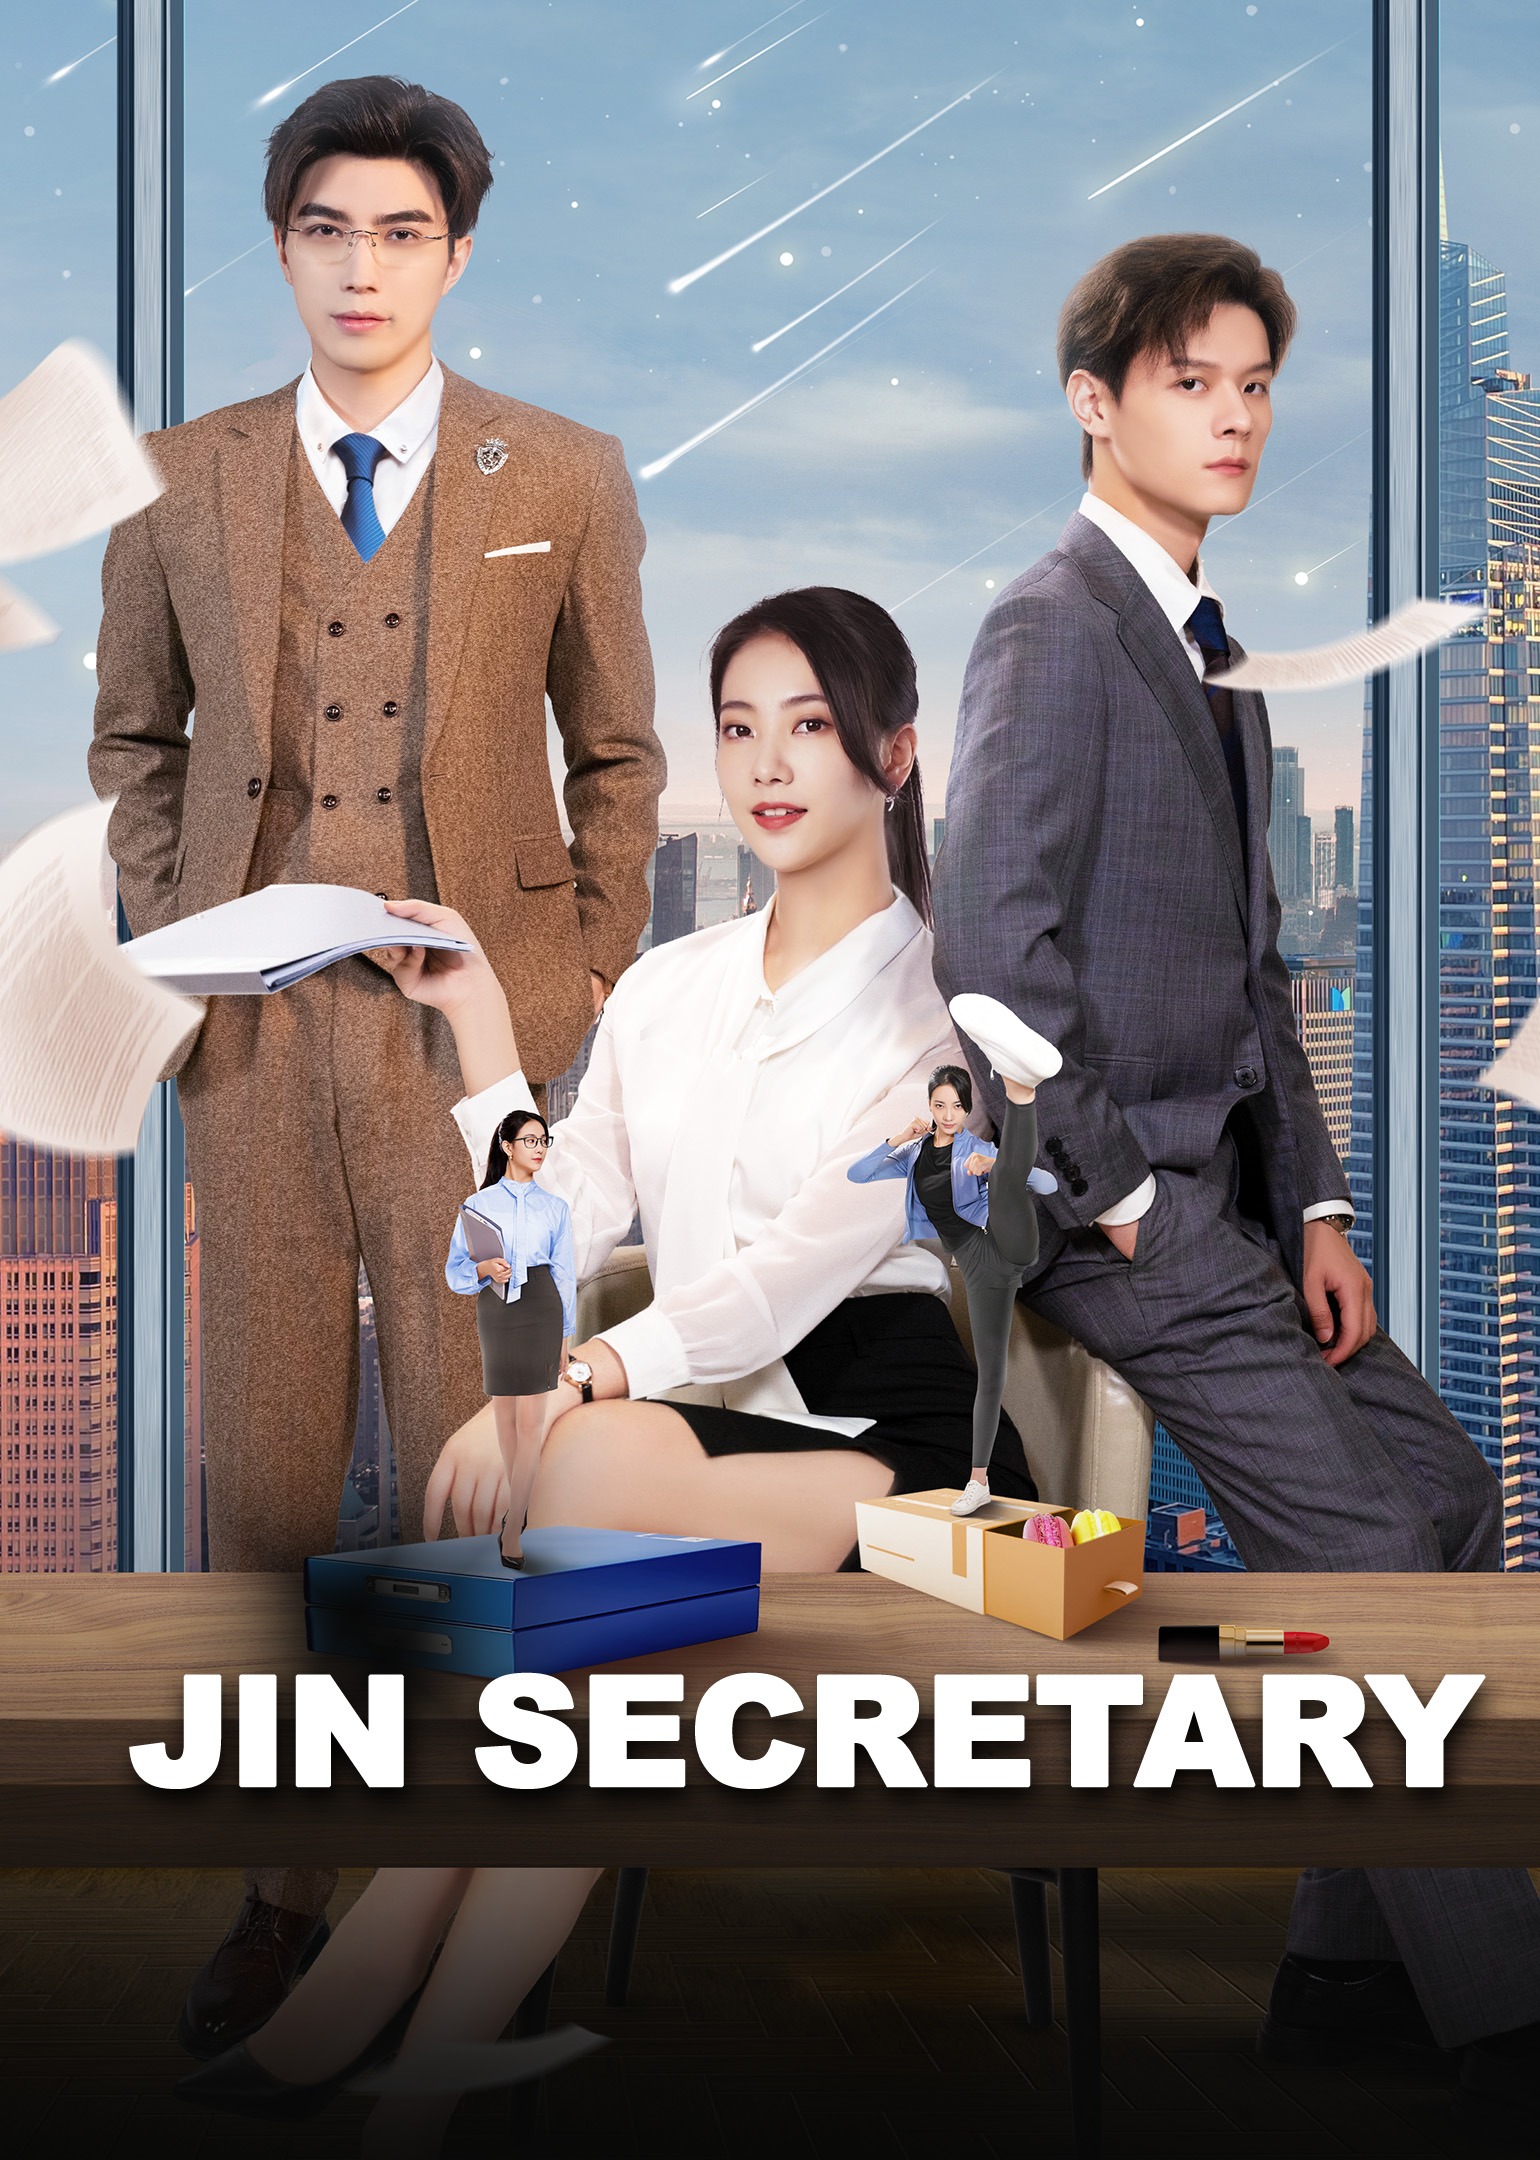 Secretária Jin